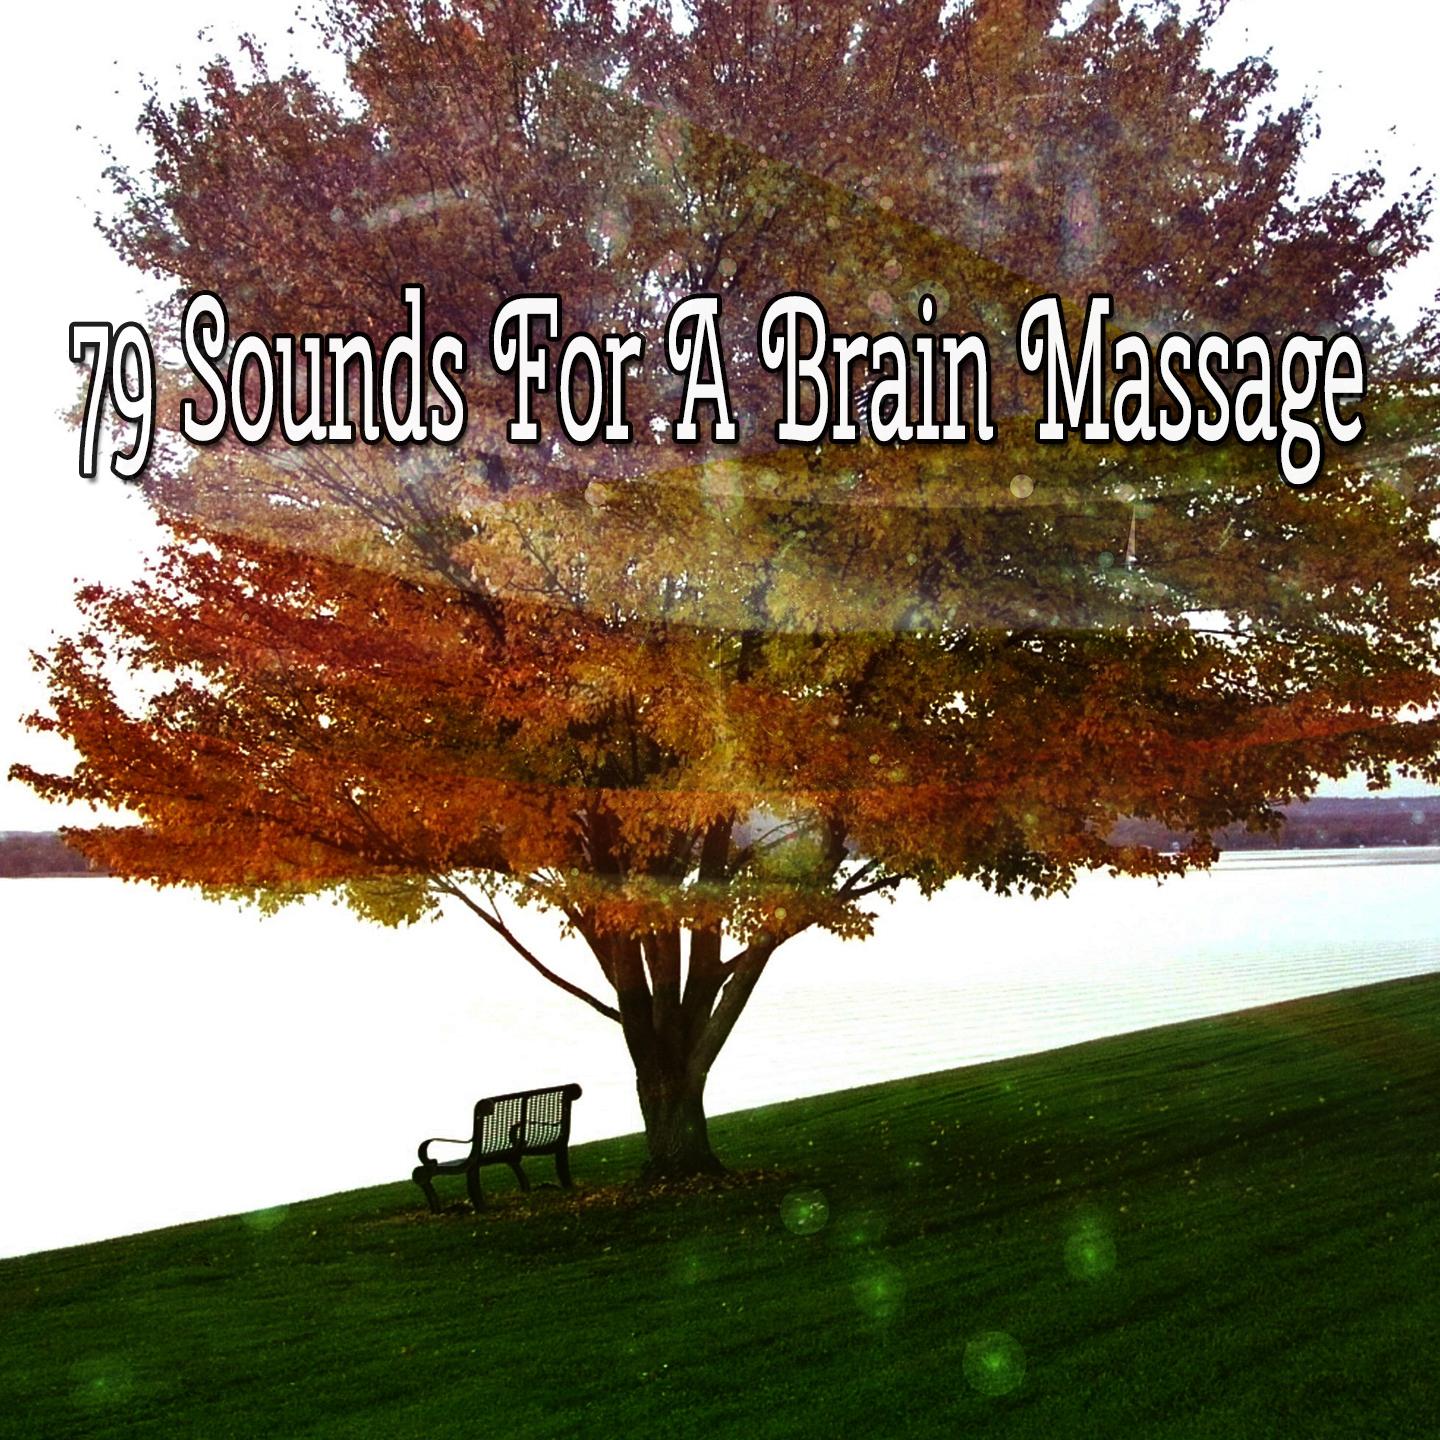 79 Sounds For A Brain Massage